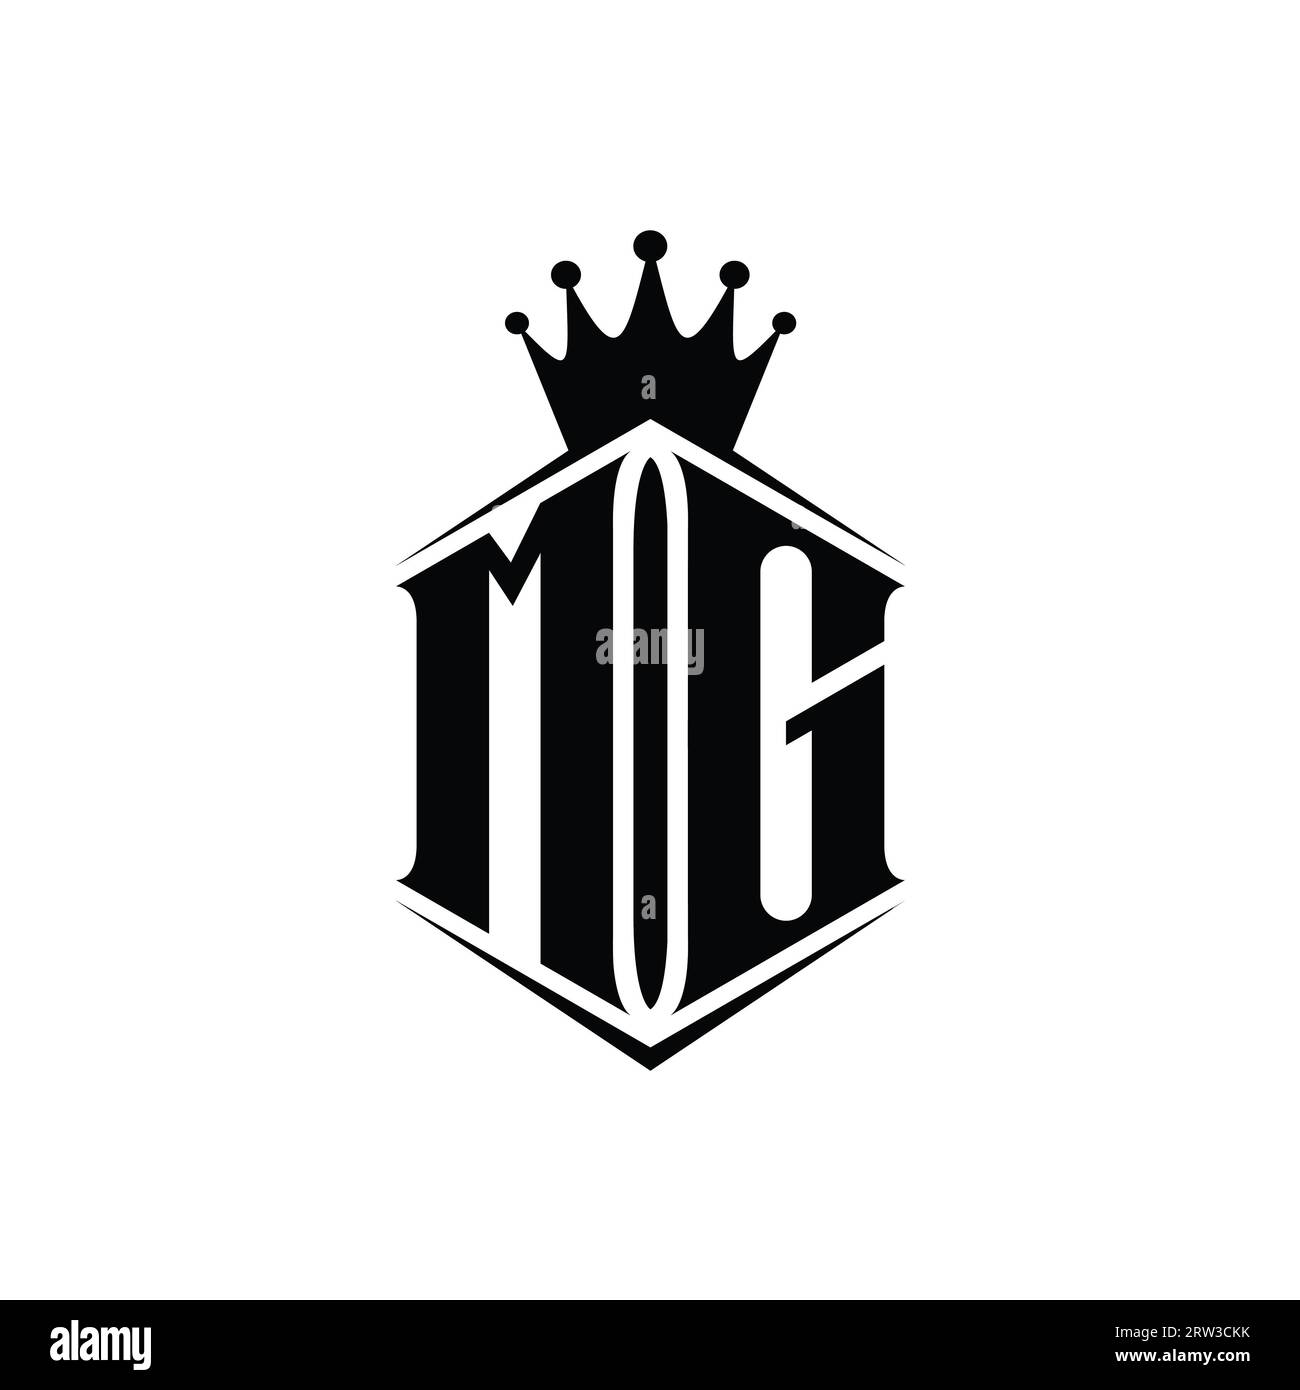 Mg logo monogram shield shape with crown design Vector Image